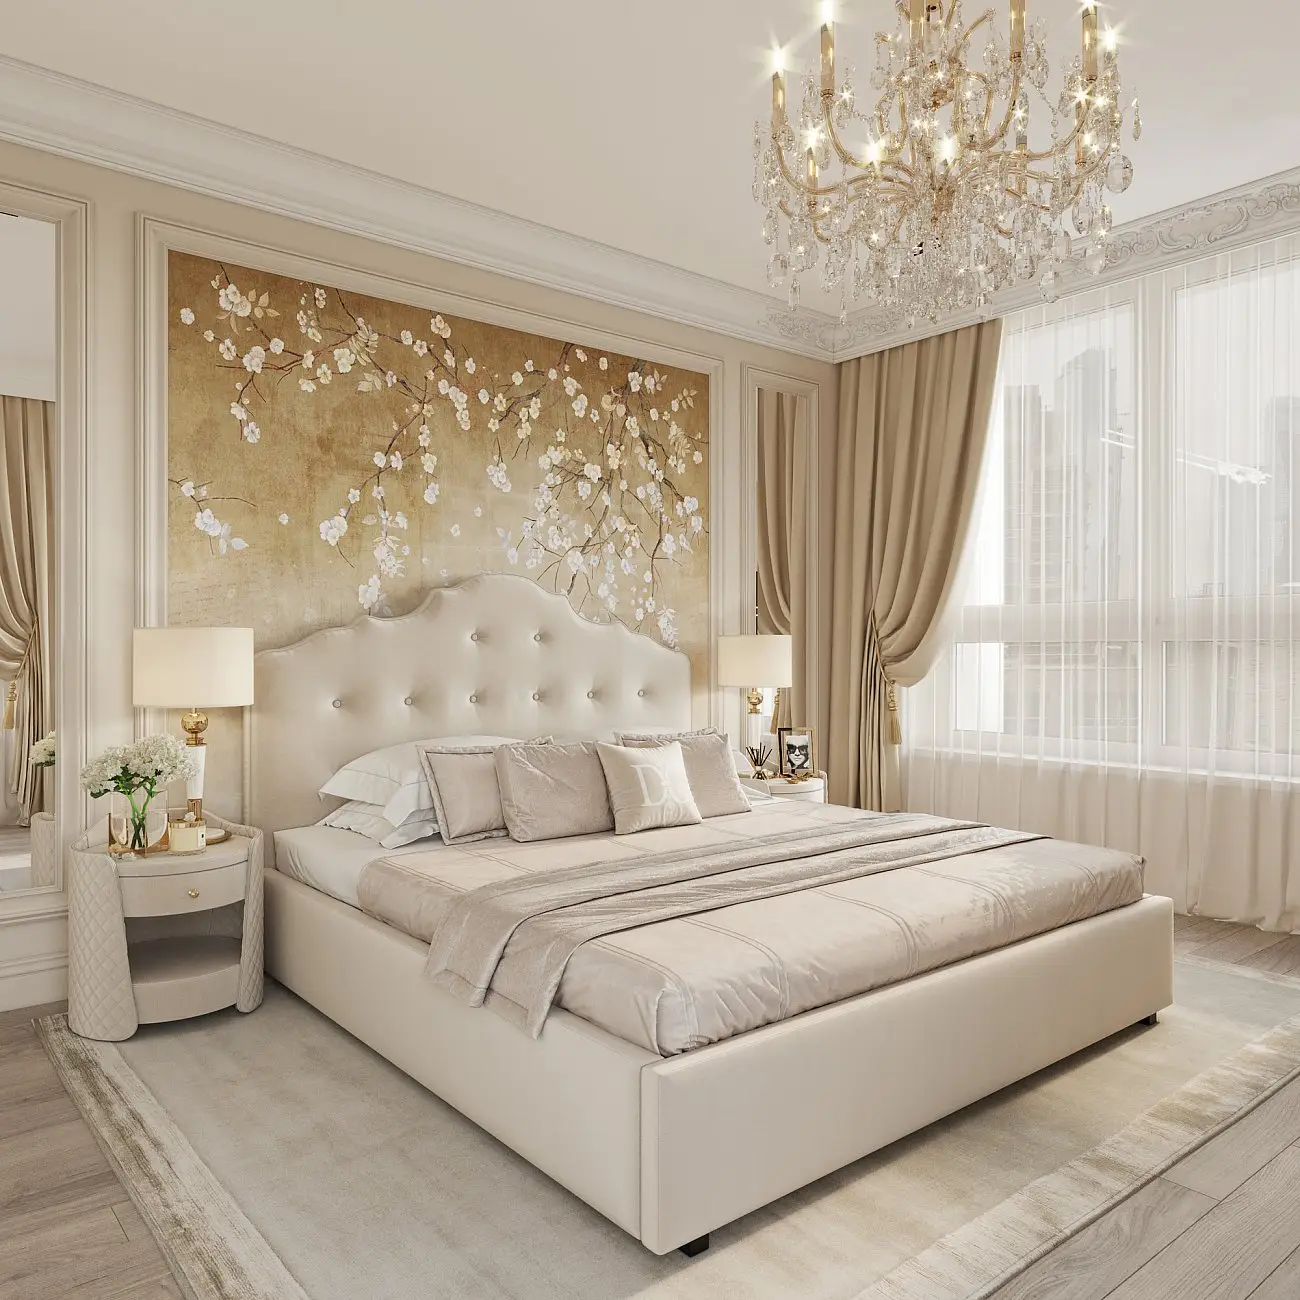 Euro bed 200x200 cm light beige Palace